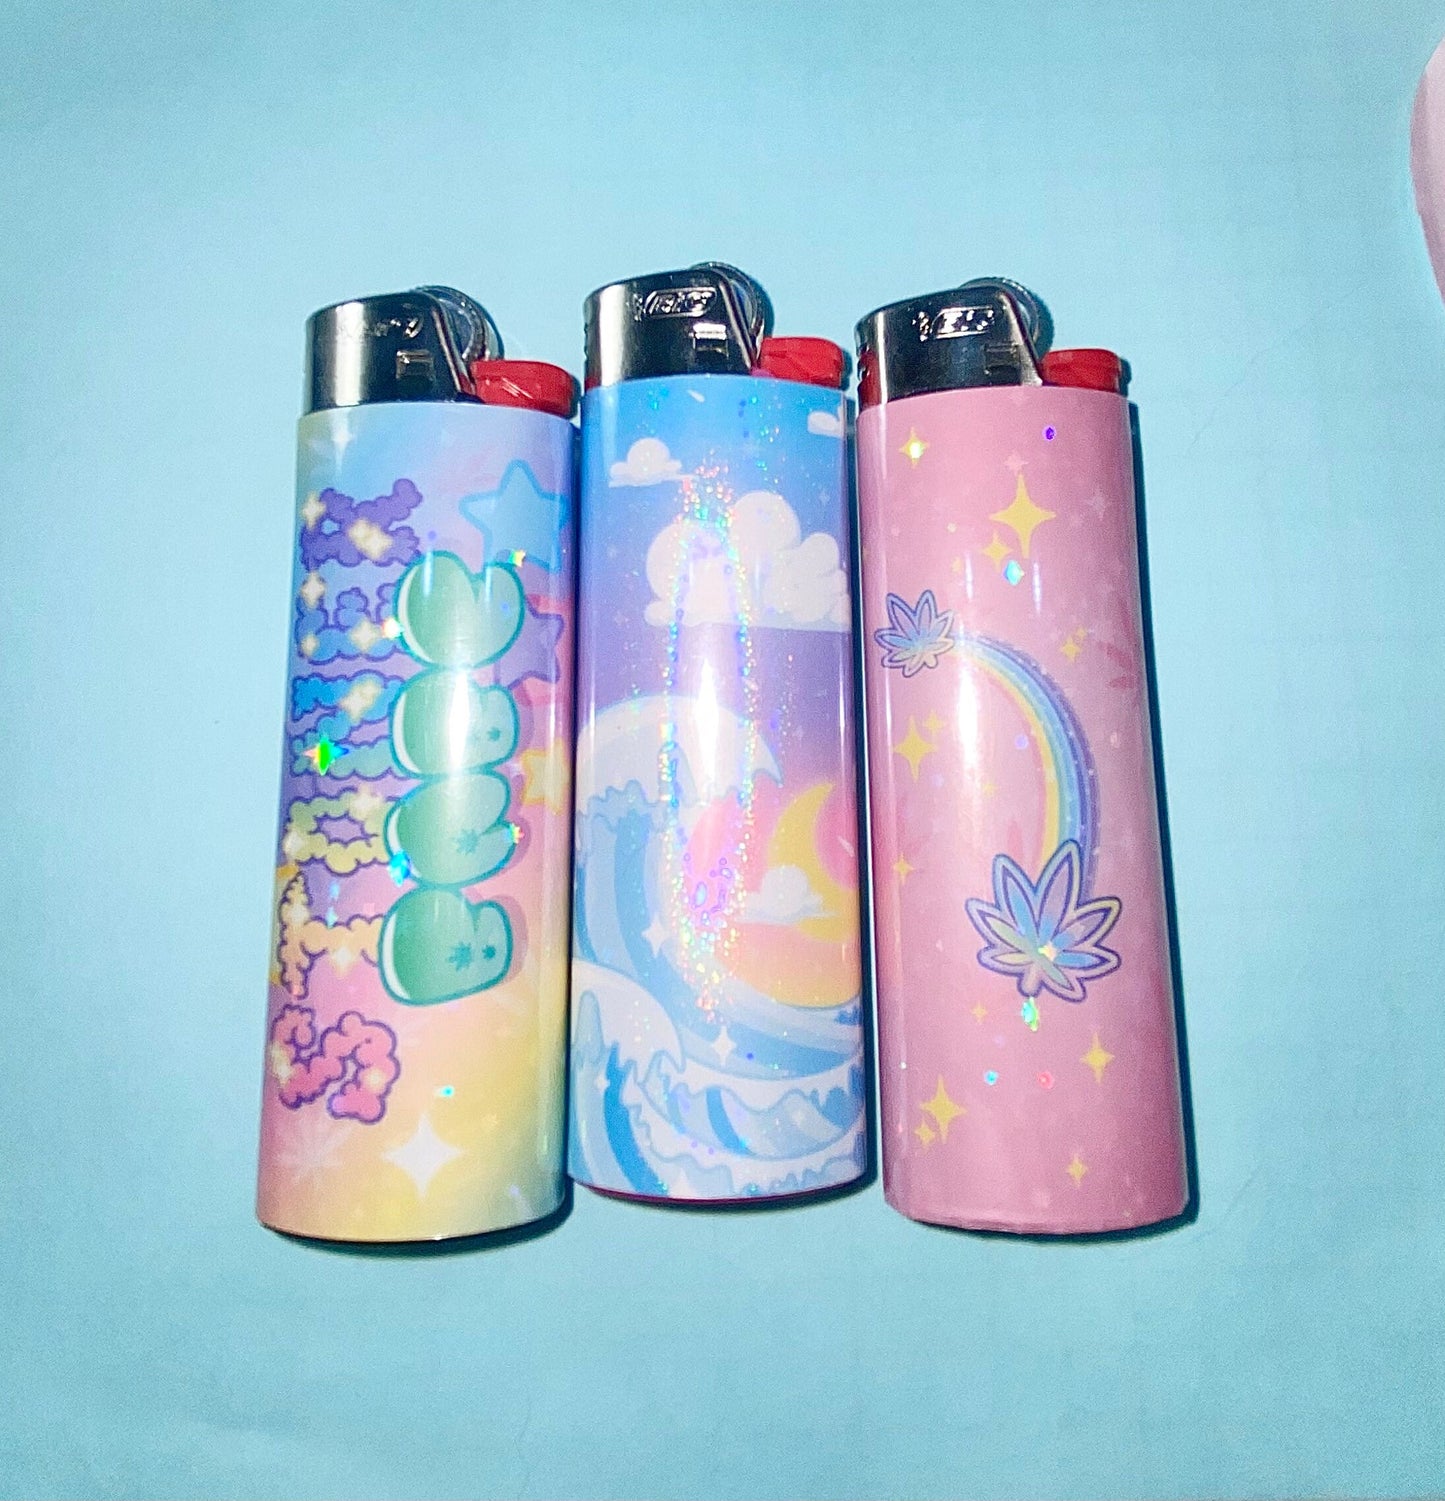 Stoner Babe Lighter Wrap | cannabis lighter wrap, Kawaii lighter wraps, lighter wraps, Cannabis art, weed stickers, Kawaii, stickers